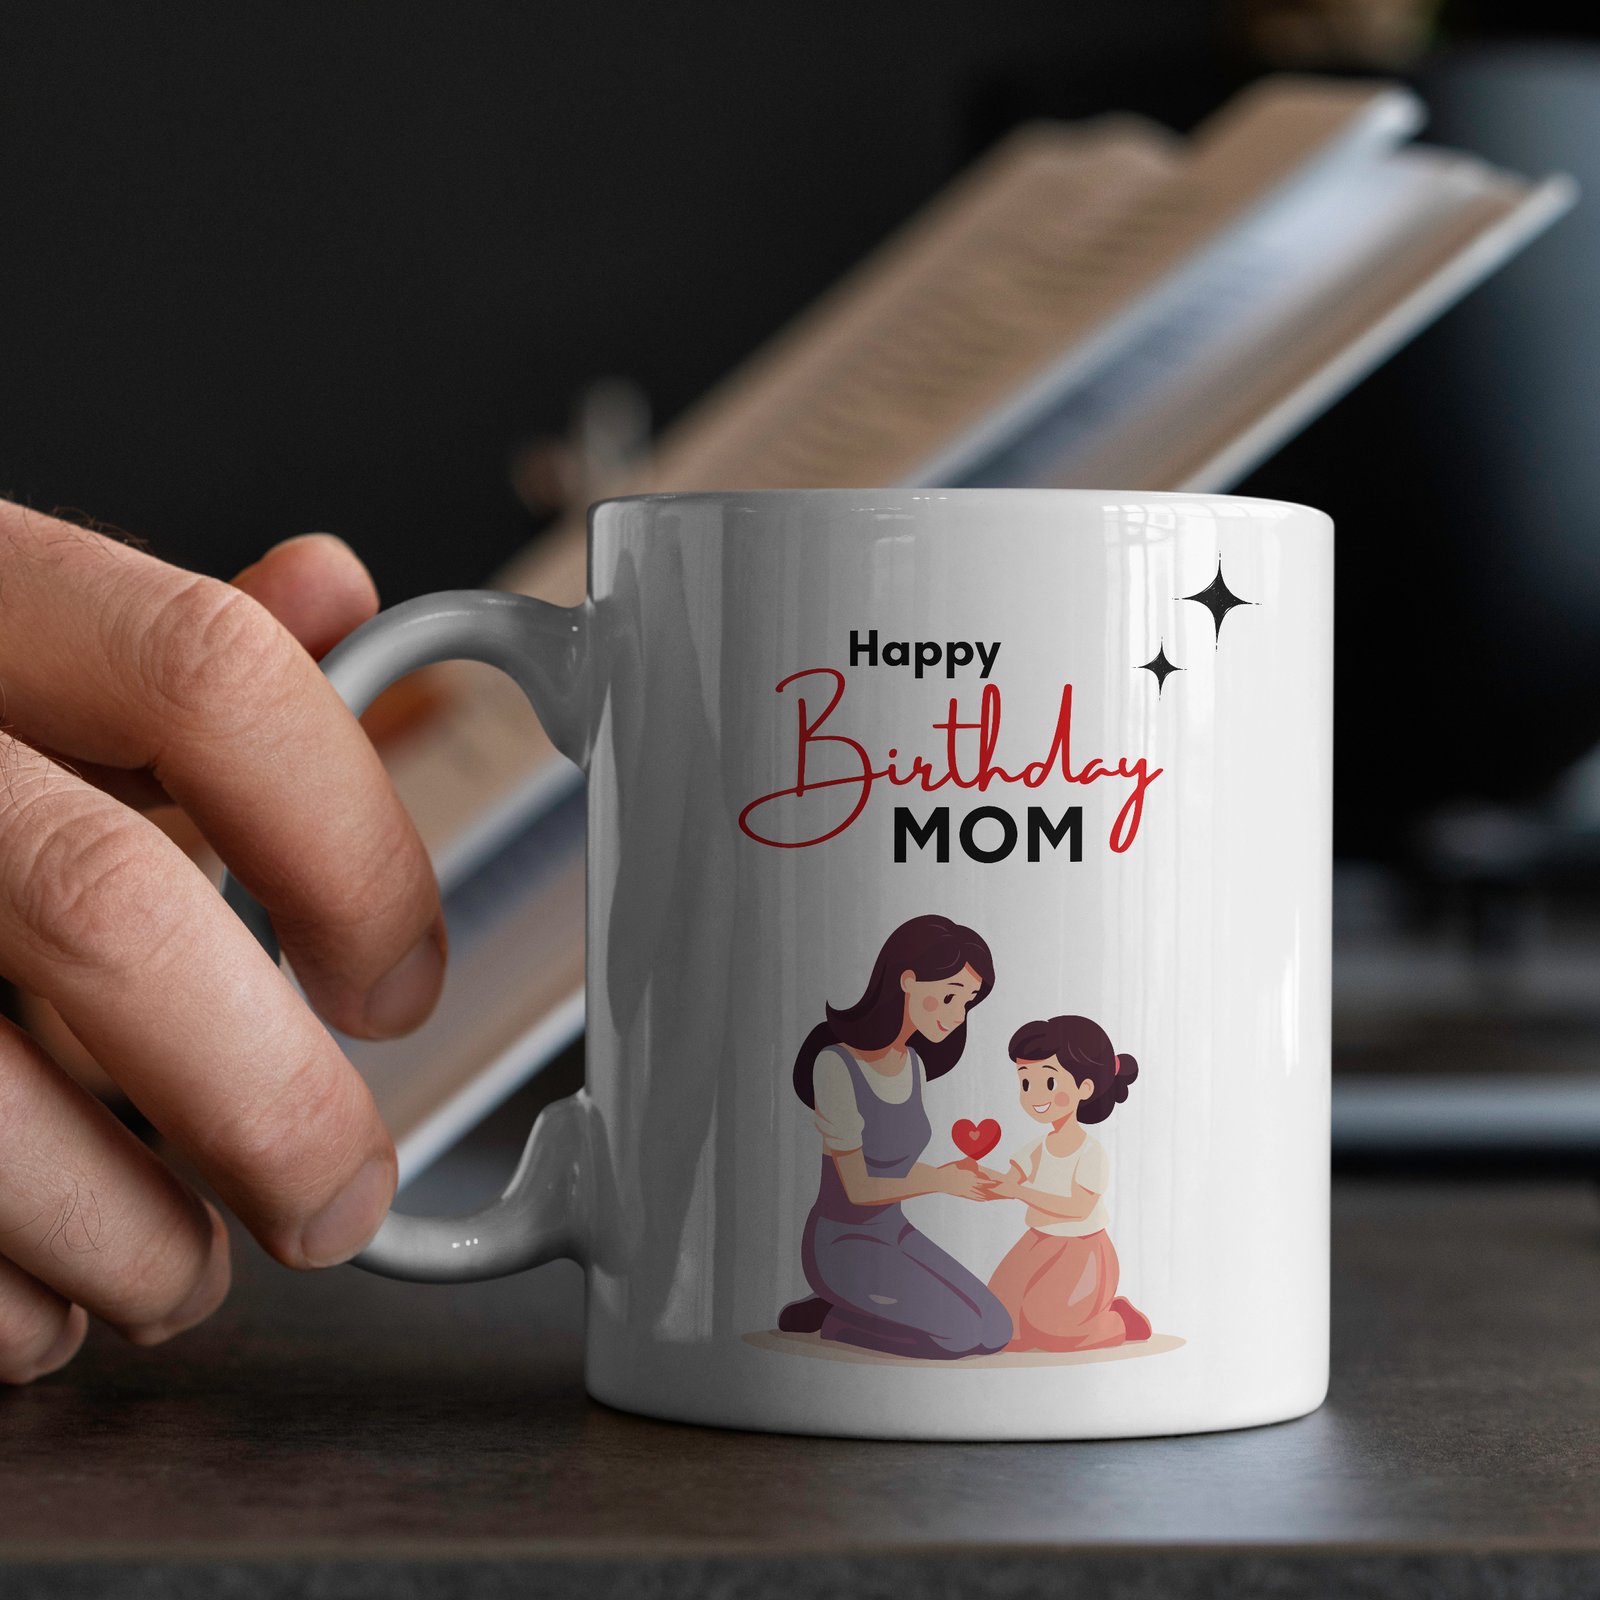 Happy Birthday Mom - Giftle Ceramic Coffee Mug (325ml) - "Happy Birthday Mom" - Special Coffee, Tea, and Cocoa Mug